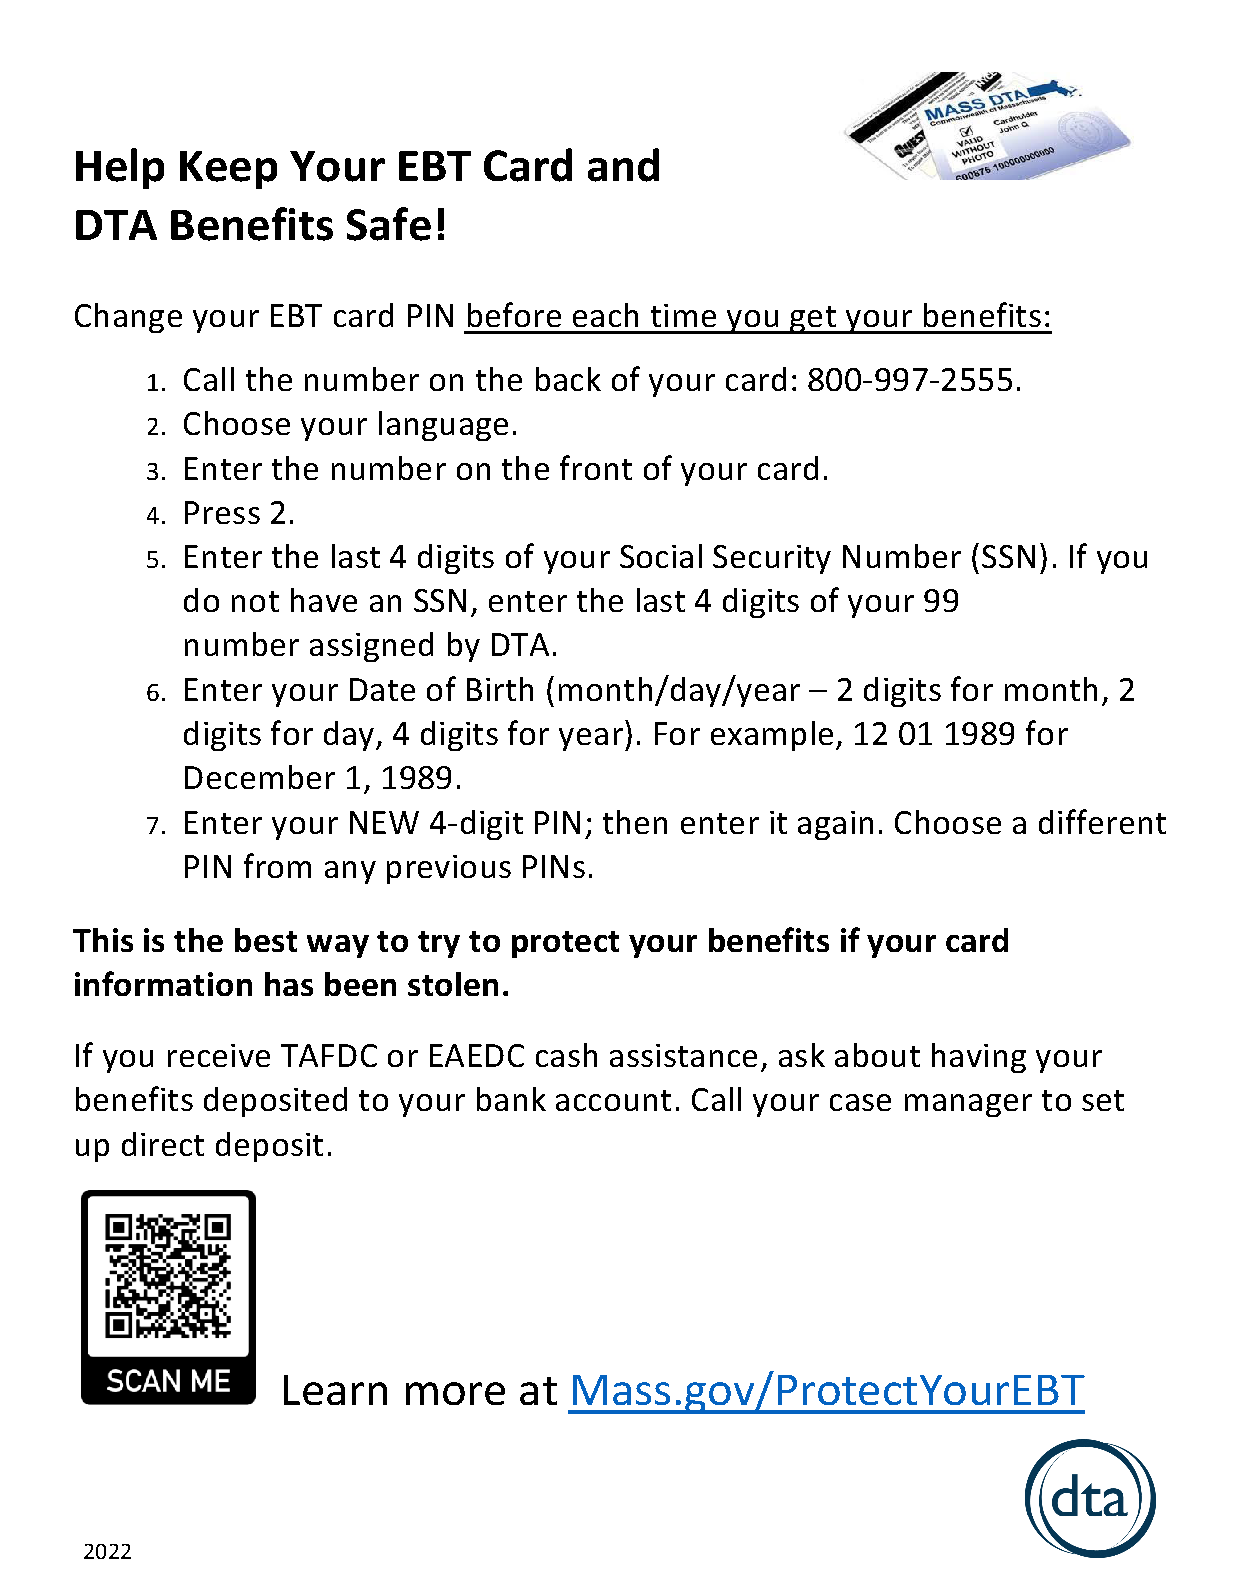 Help Keep Your EBT Card and DTA Benefits Safe!